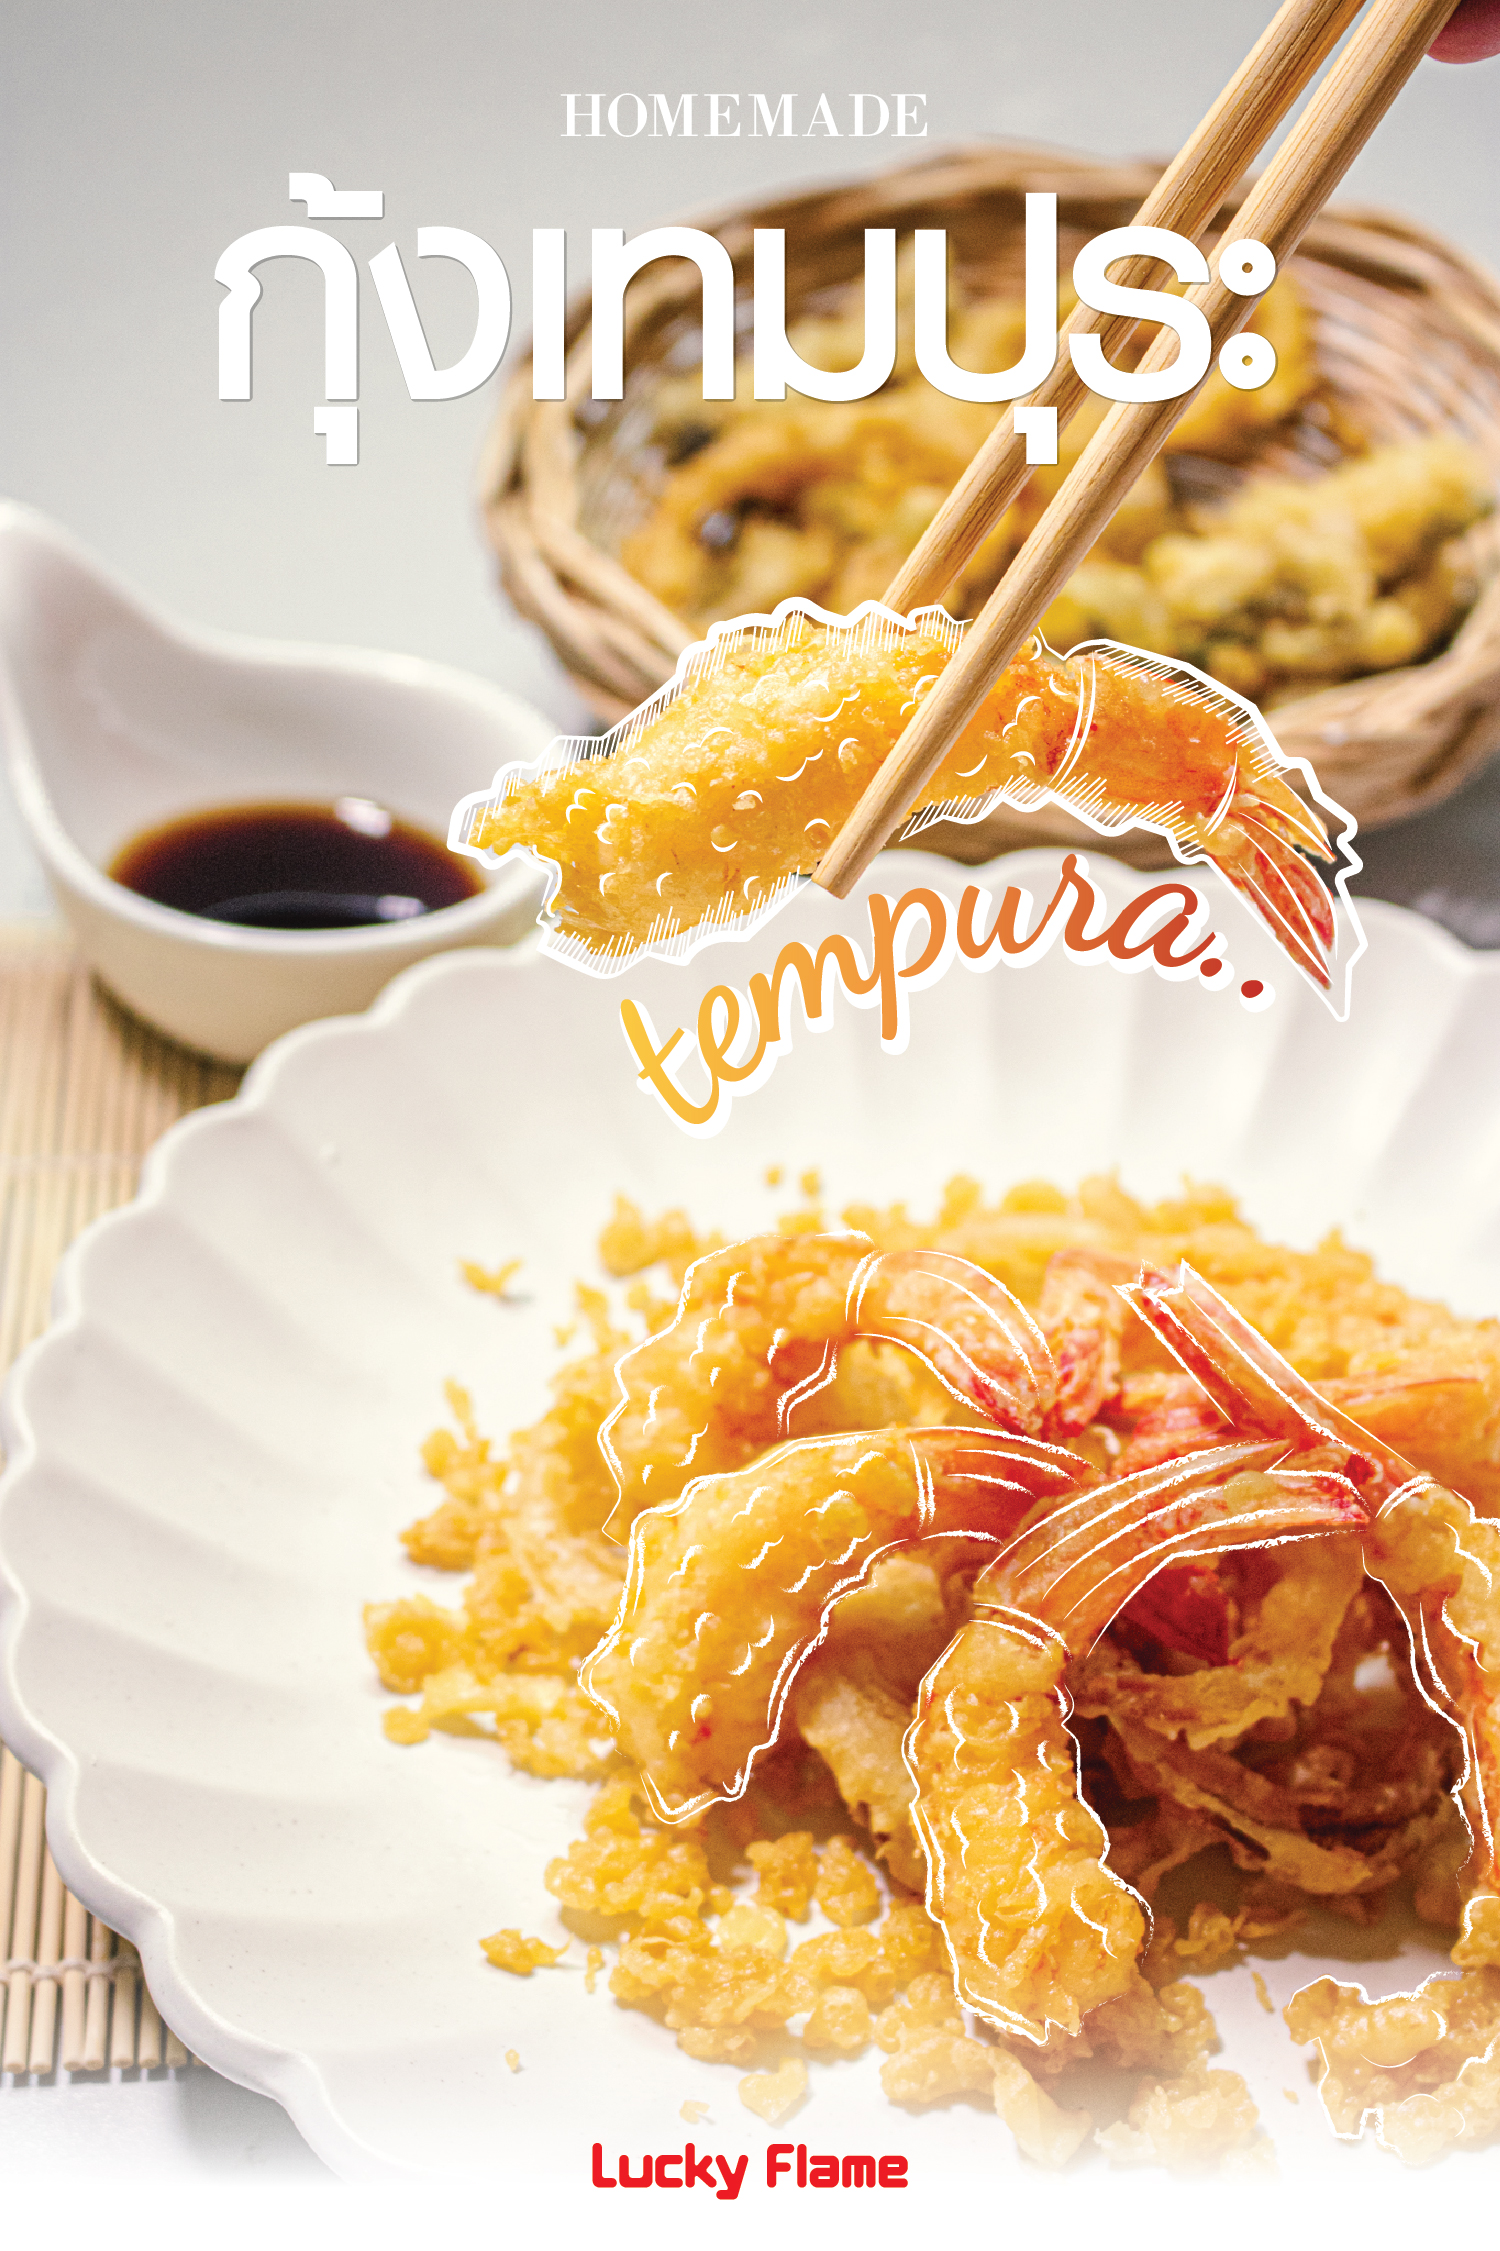 Make your DIY Tempura shrimps